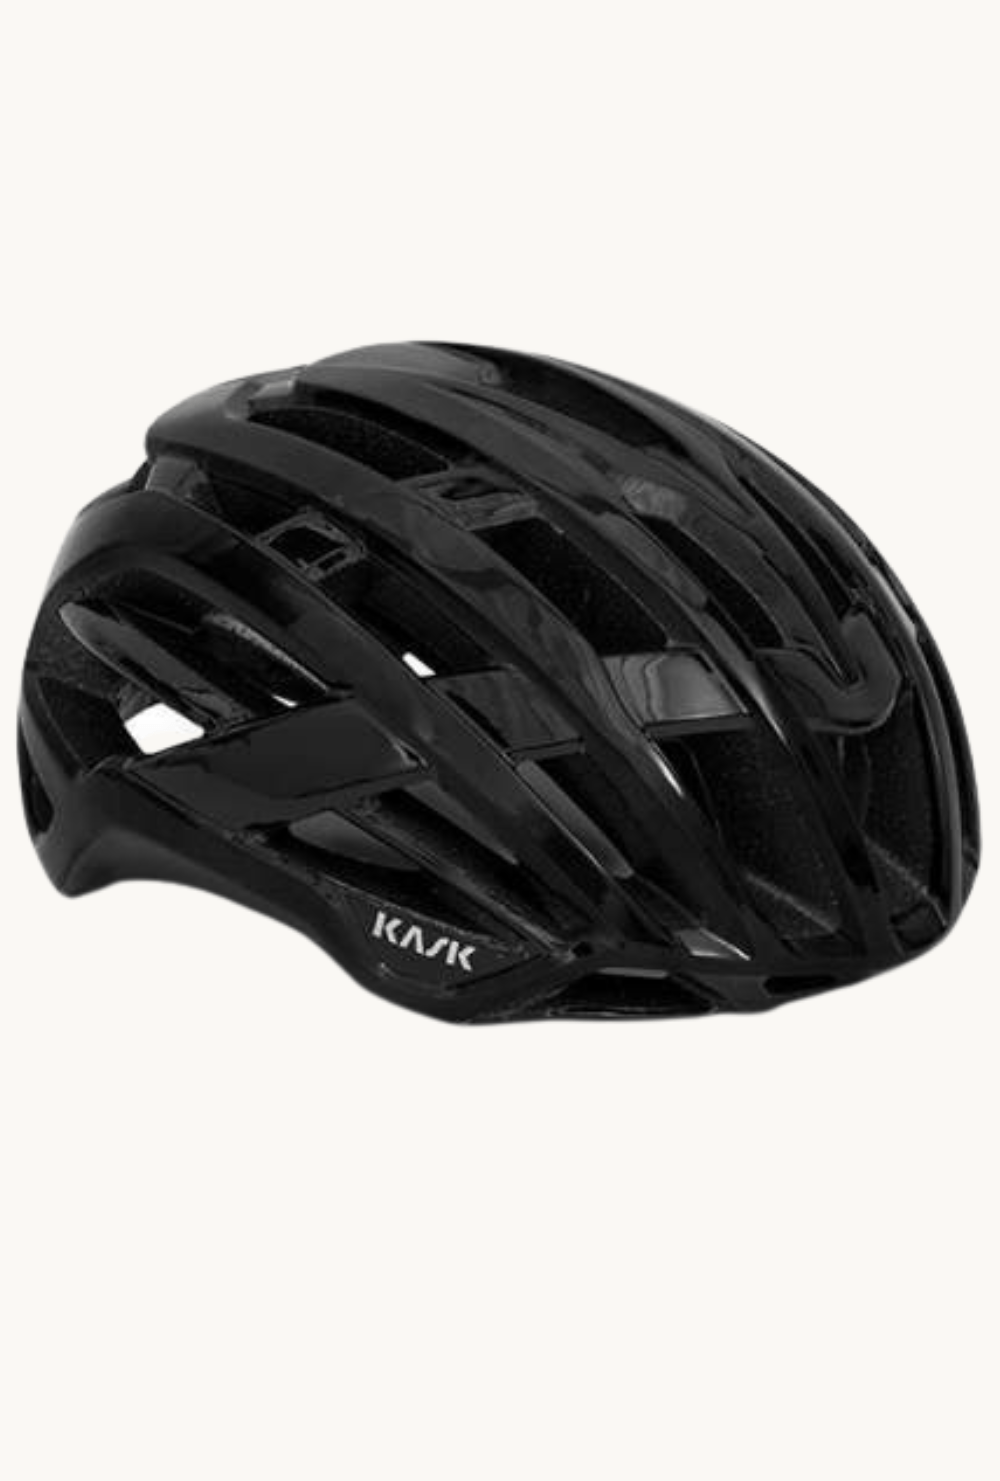 Helmet - Kask Valegro Blackmedium / Black